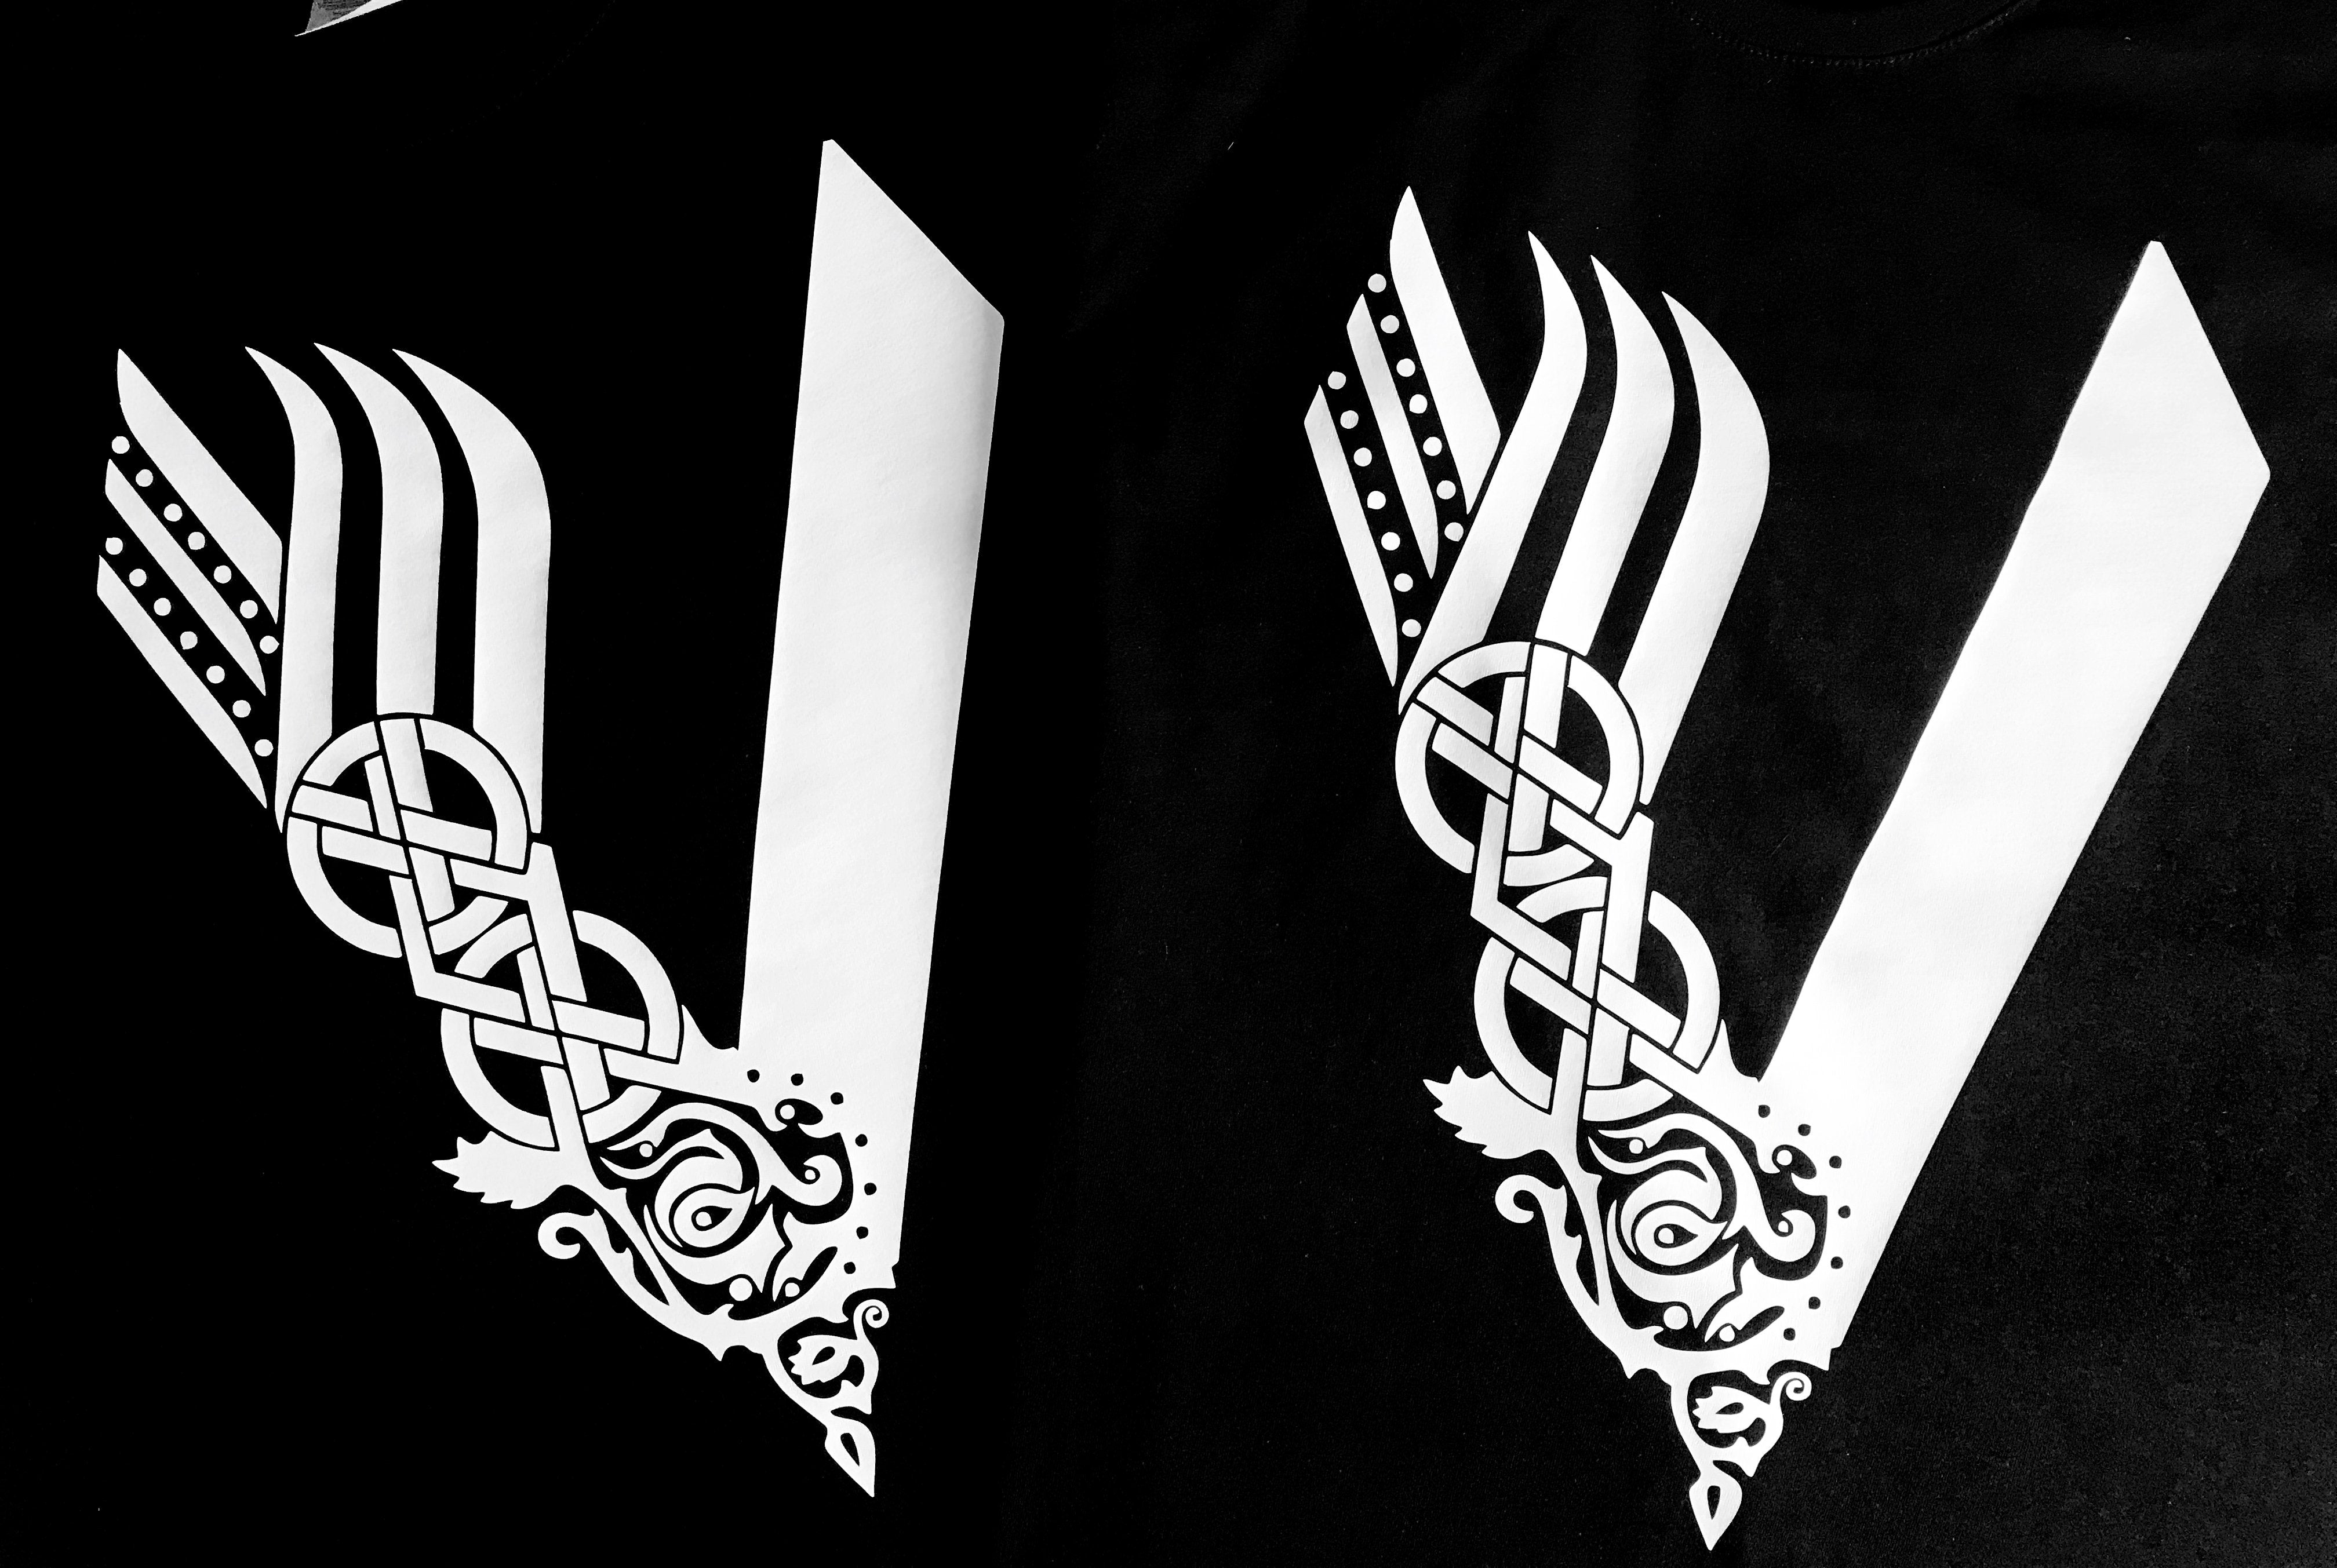 Vikings inpired T shirt-men woman T shirts-DiamondsKT